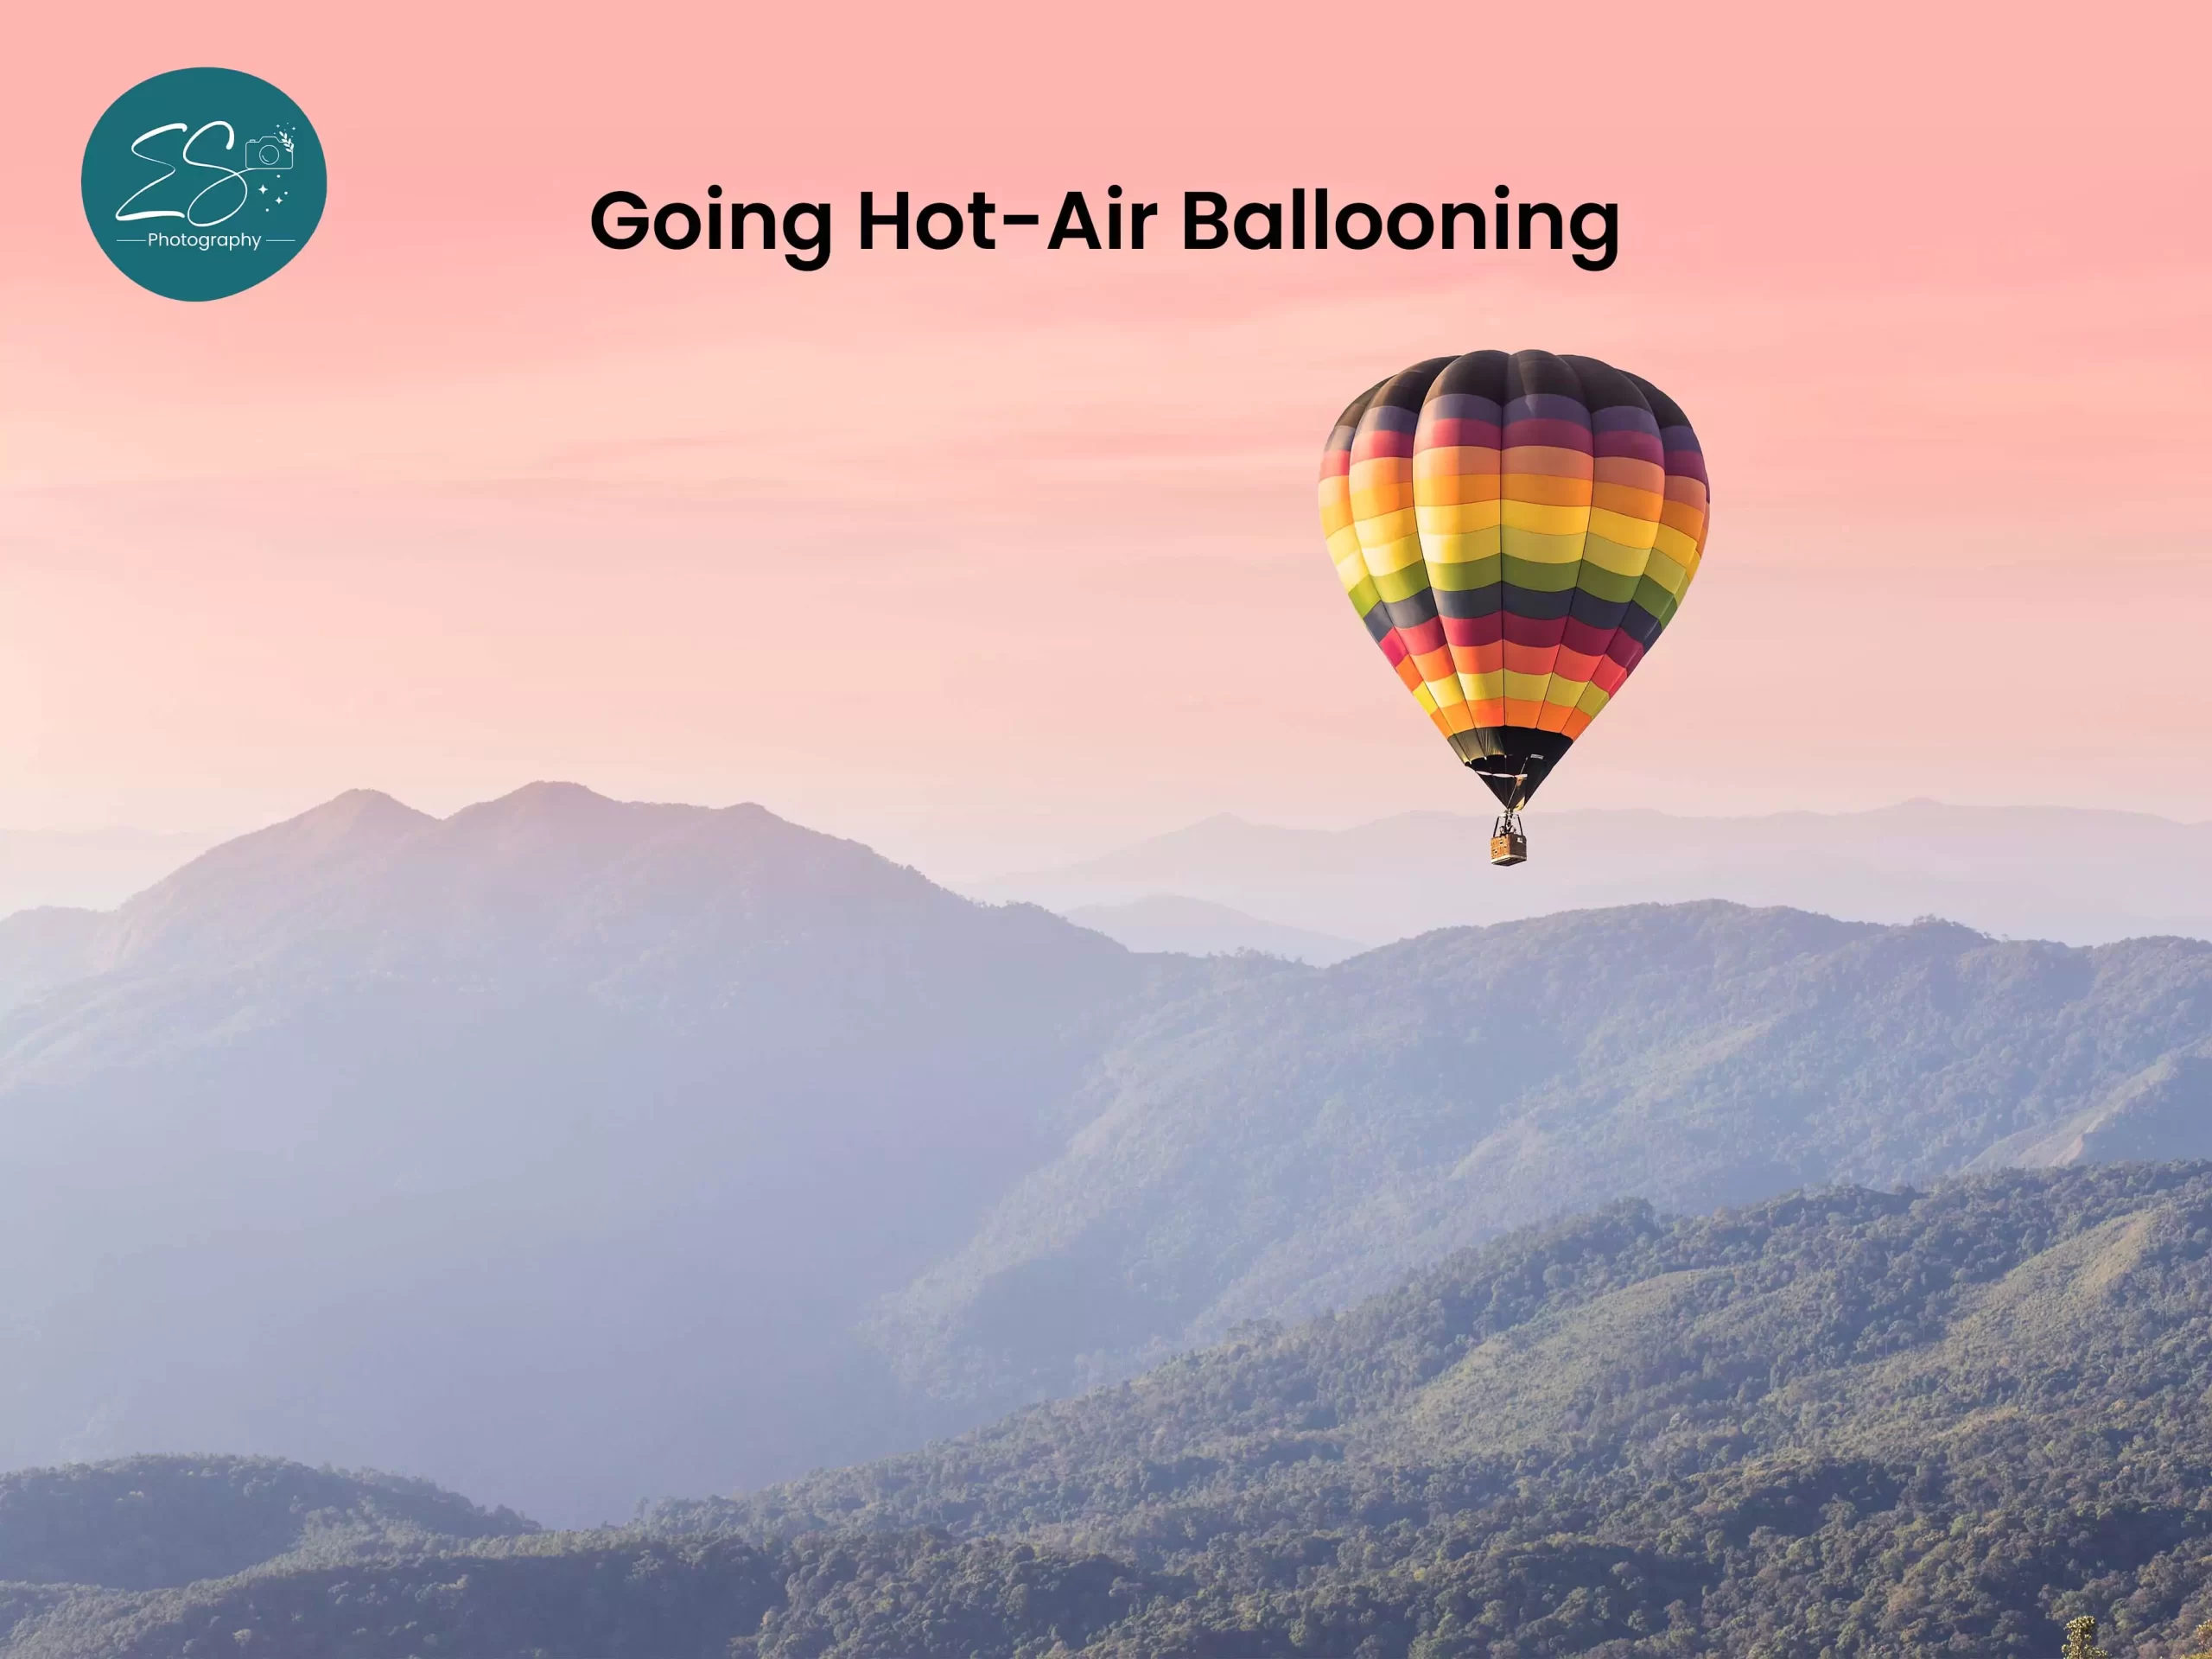 Going Hot-Air Ballooning